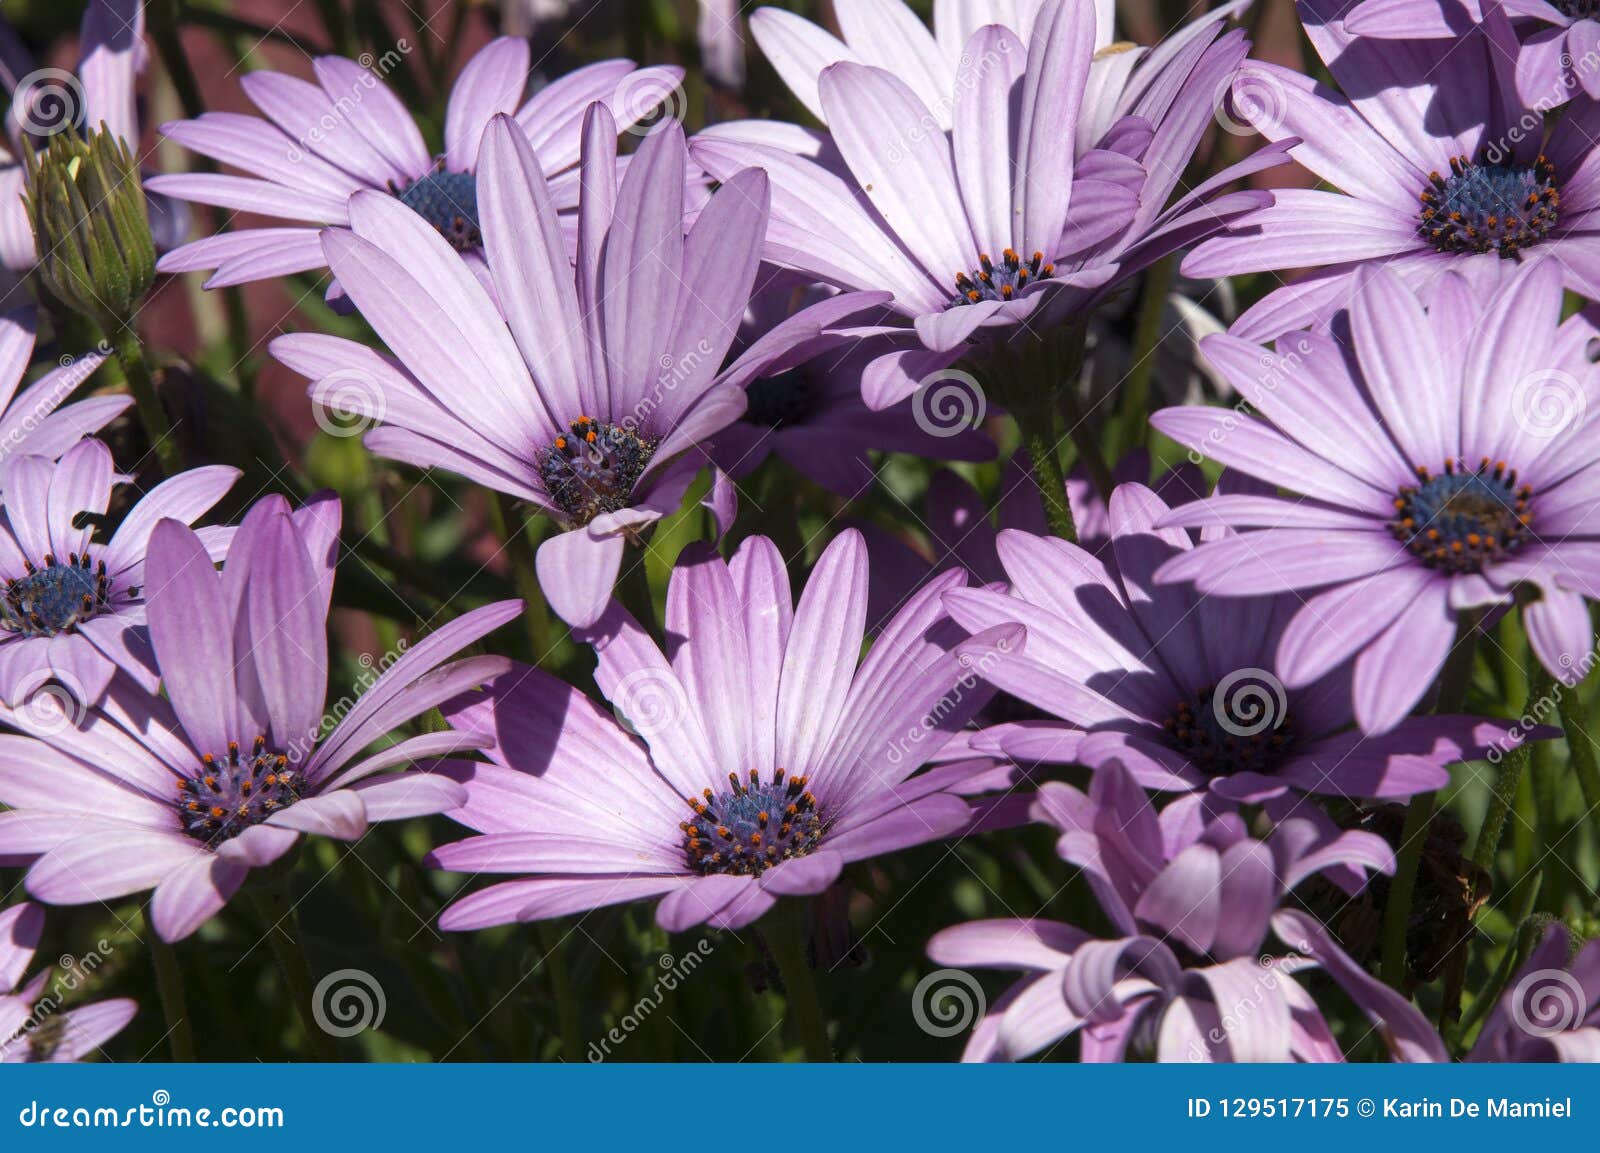 Mauve African Daisy Flowers Stock Image Image Of Botany Colorful 129517175